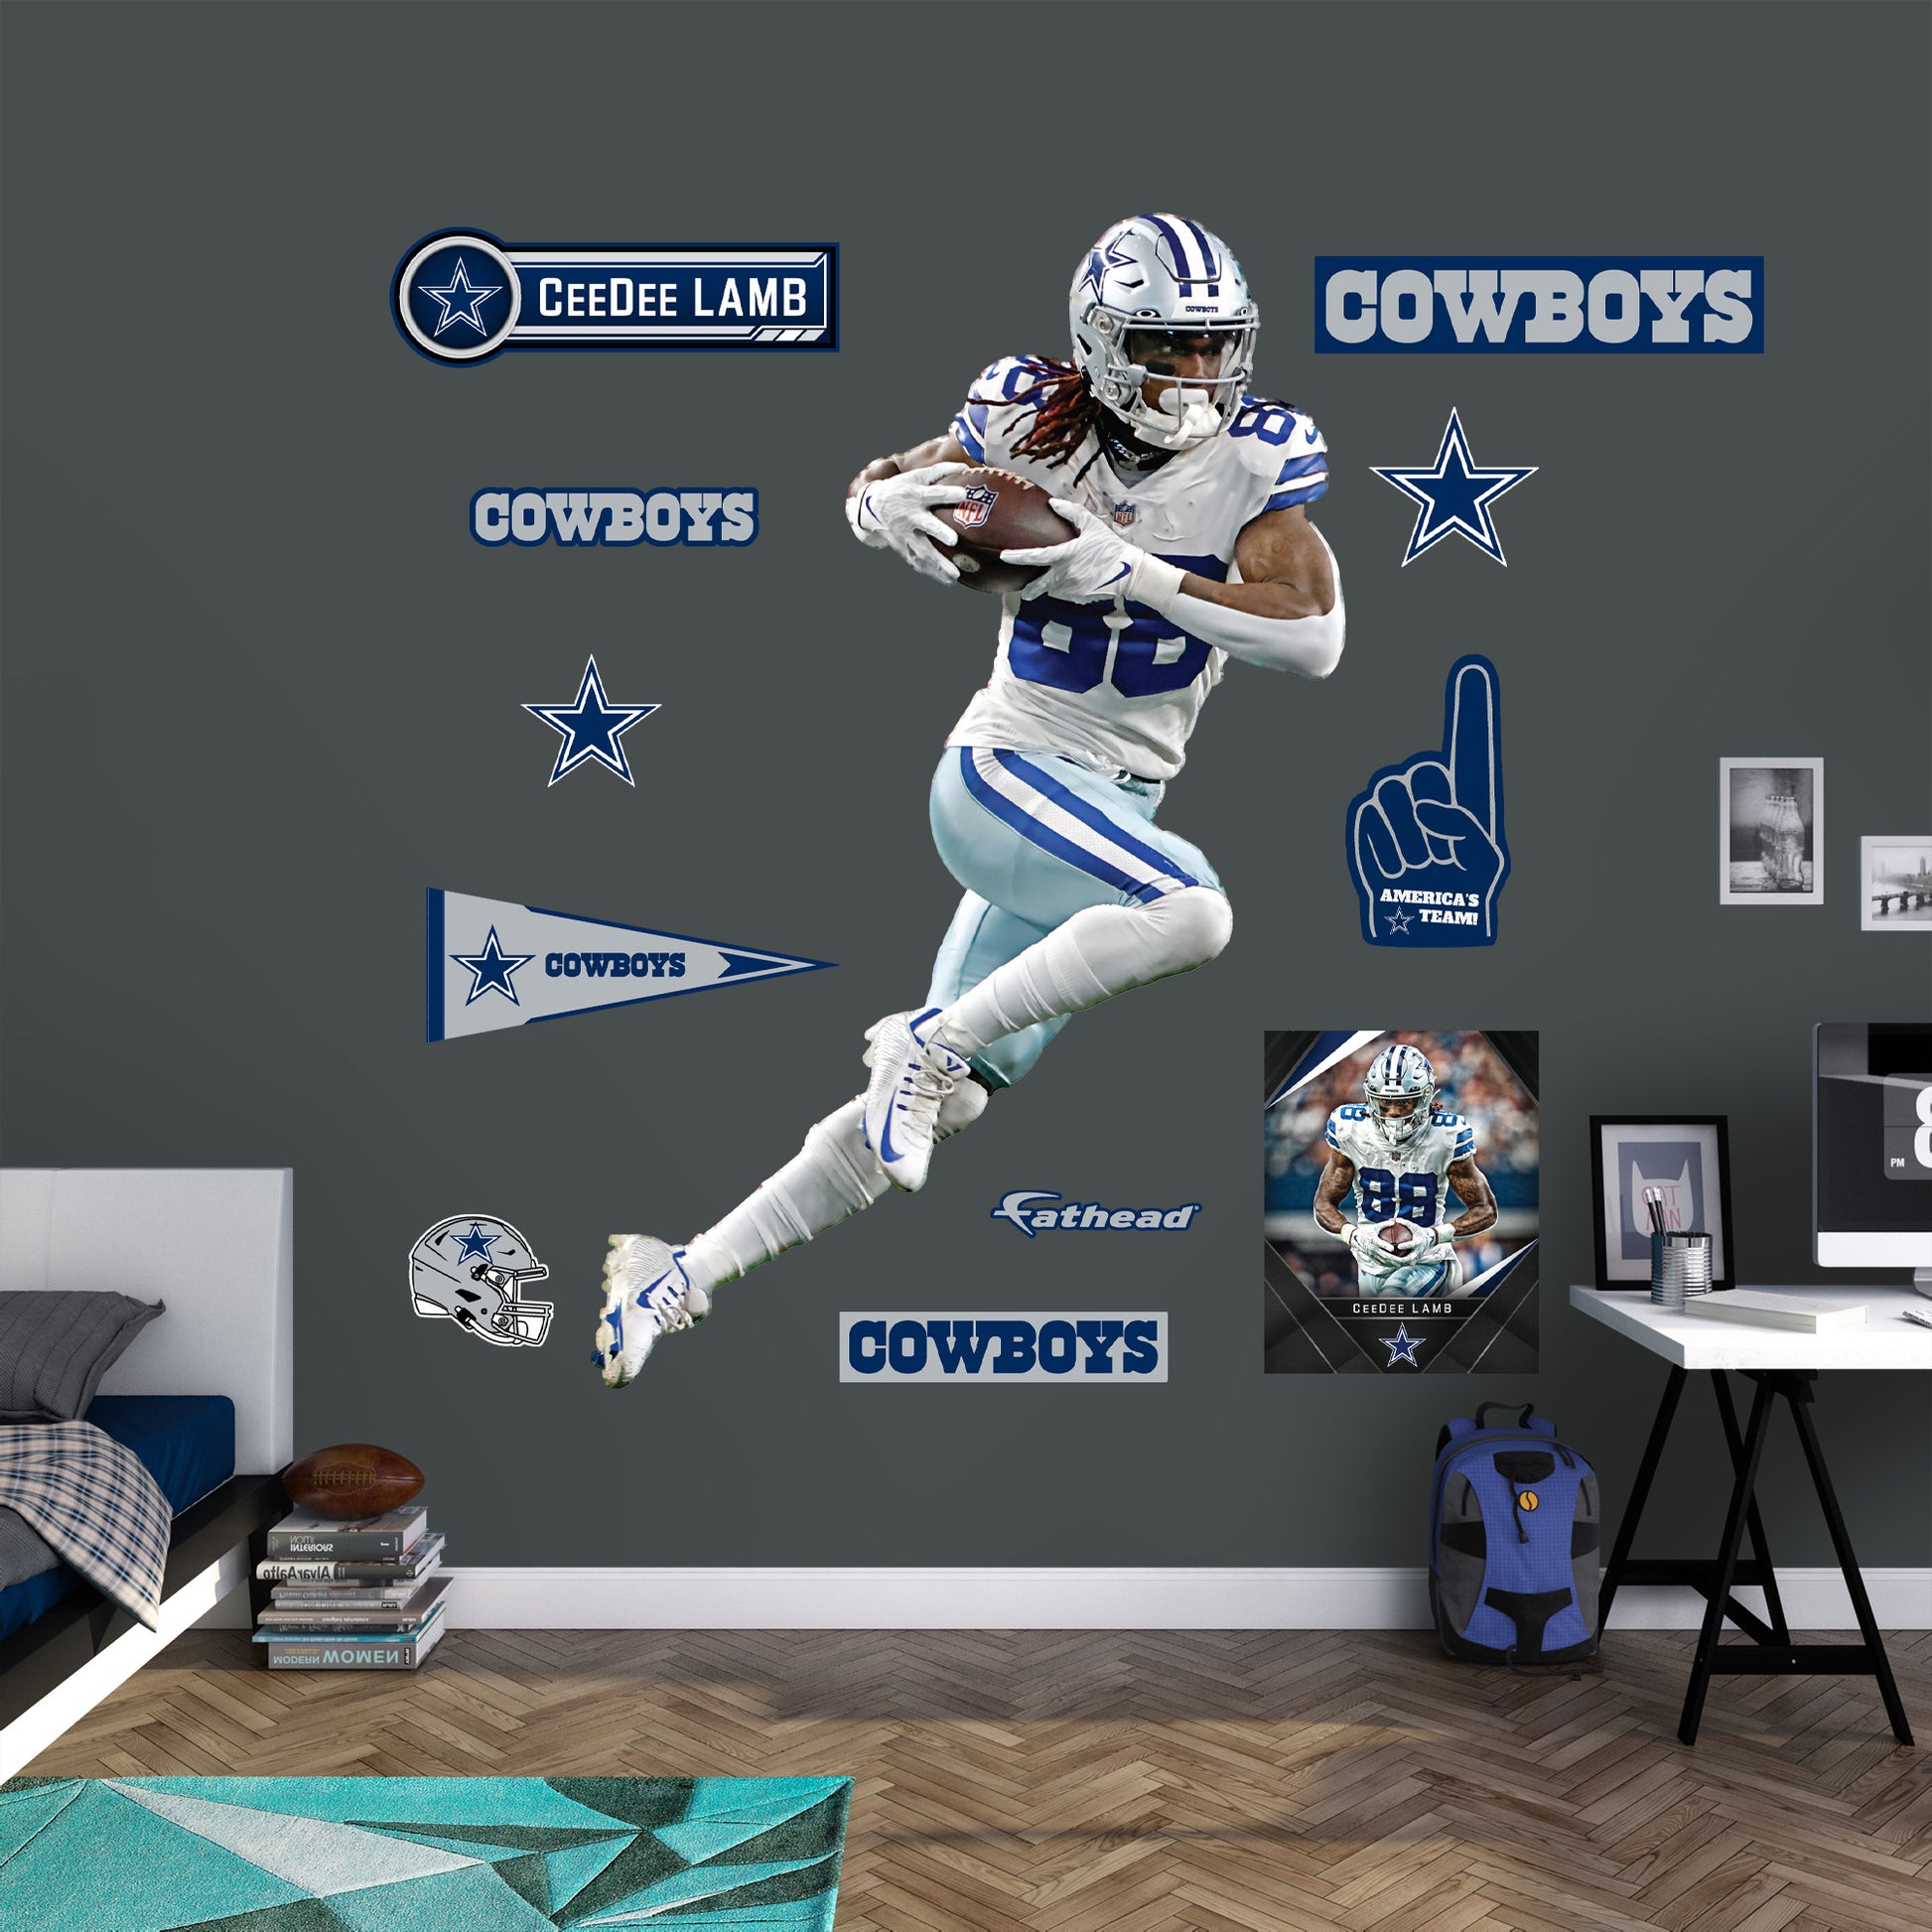 Dallas Cowboys: CeeDee Lamb 2022 - Officially Licensed NFL Outdoor